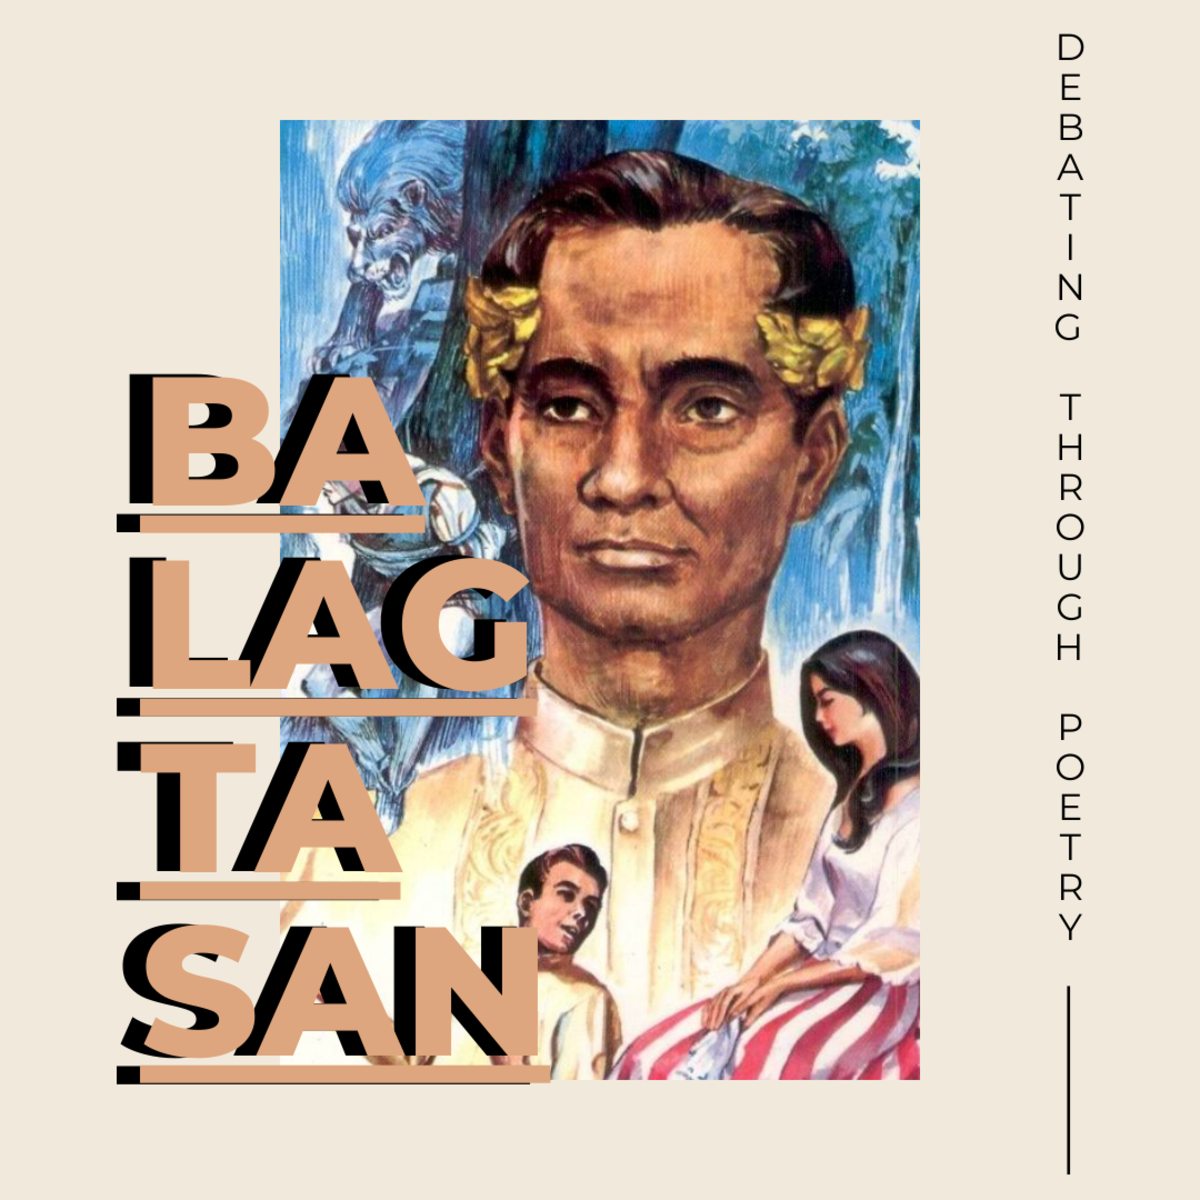 Balagtasan: The Art of Debating Through Poetry